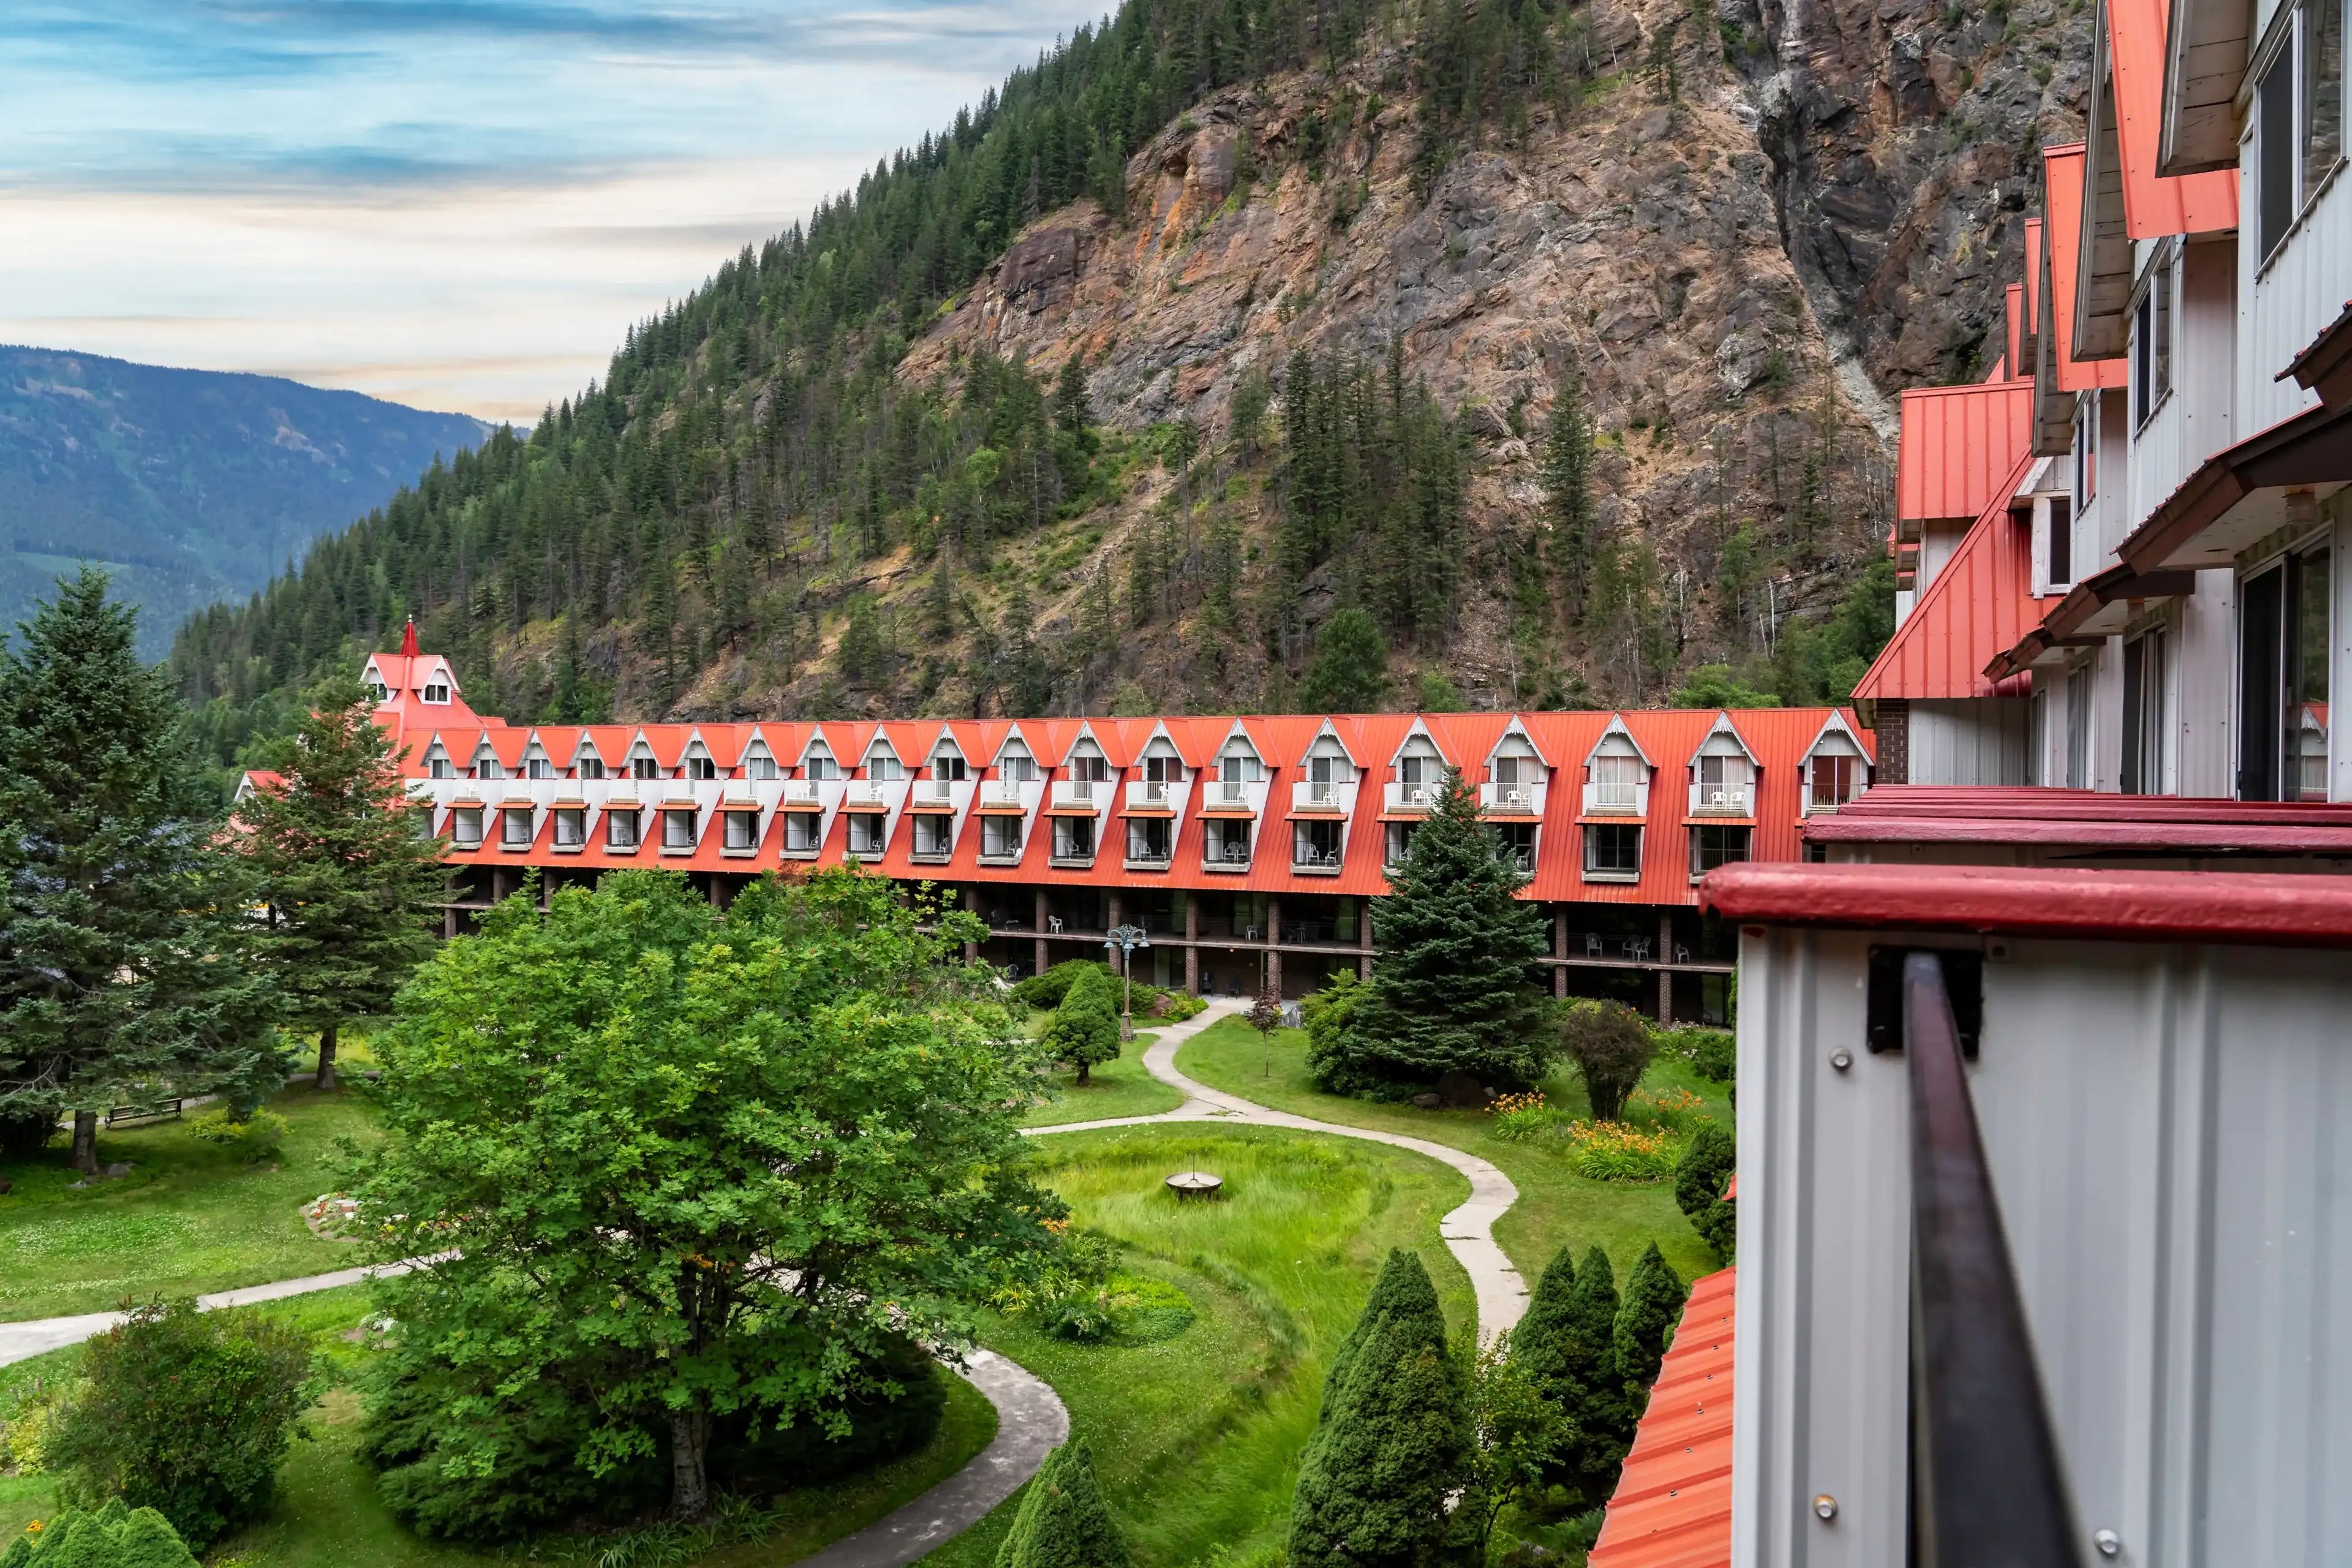 Best Revelstoke hotels. Cheap hotels in Revelstoke, British Columbia, Canada